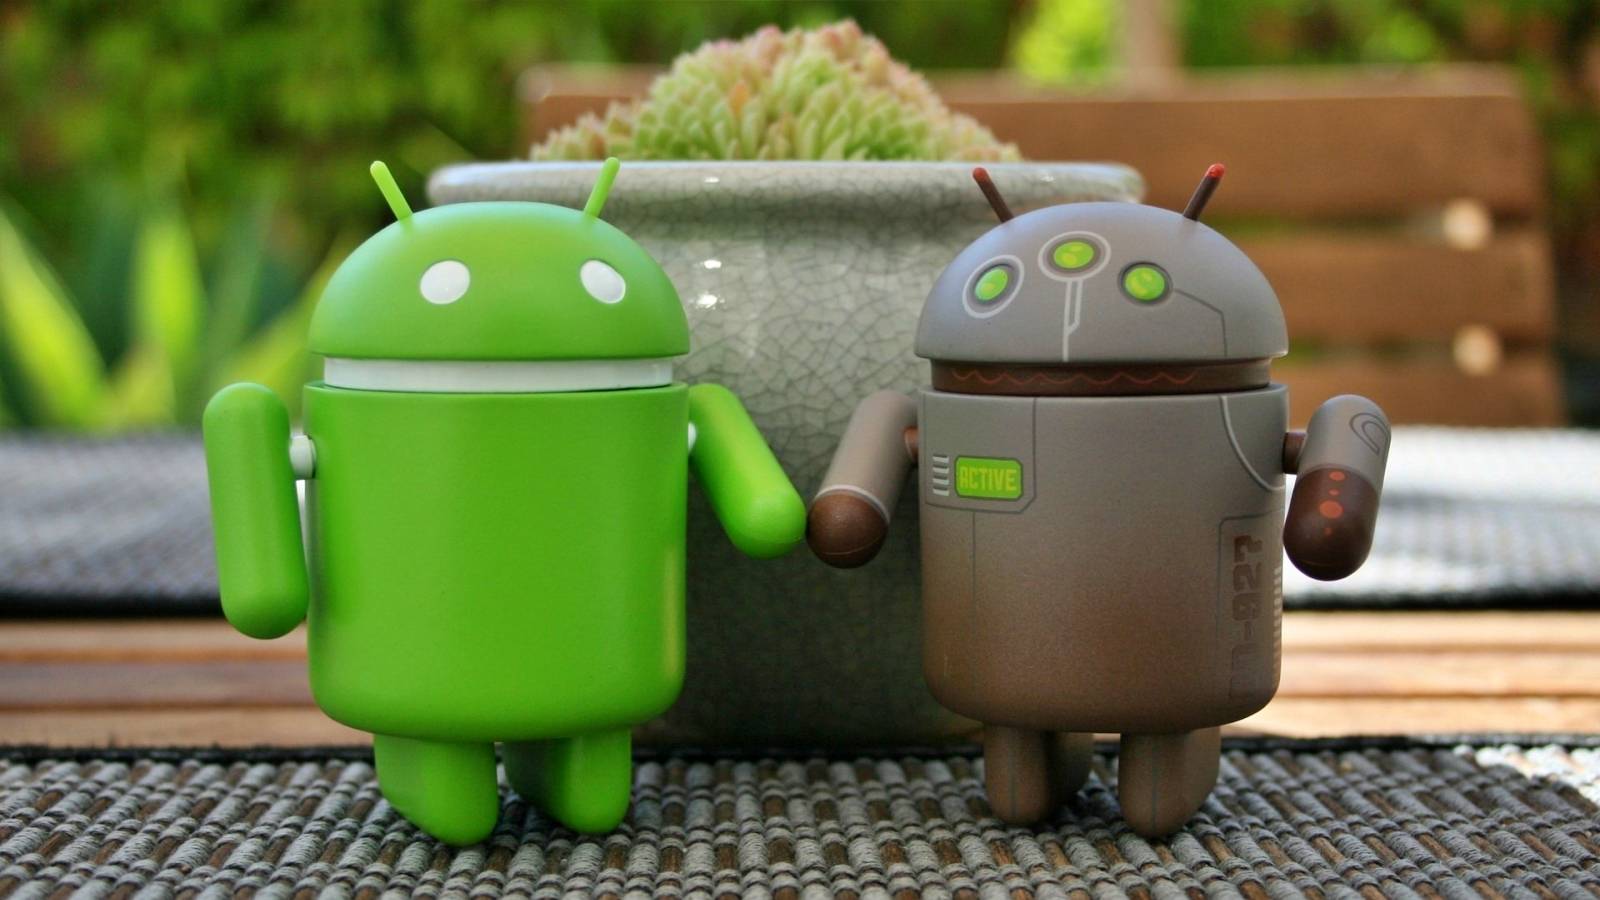 Android Noua AMENINTARE Grava Descoperita Pune Pericol Multa Lume